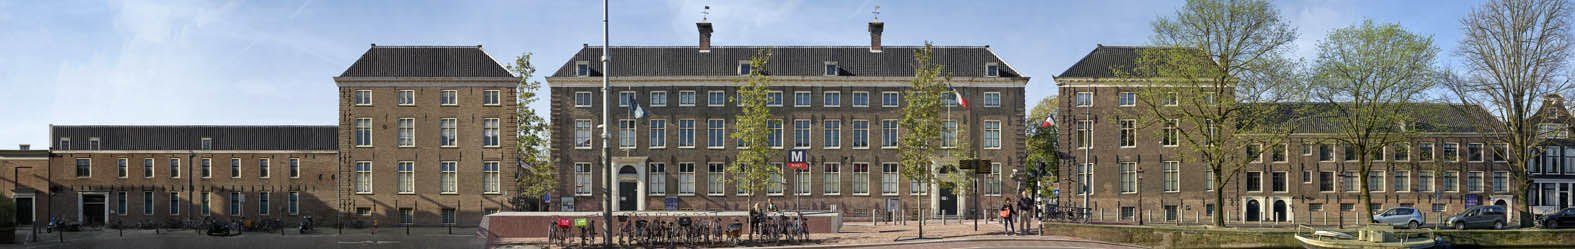 Maison Descartes building in Amsterdam, outside view